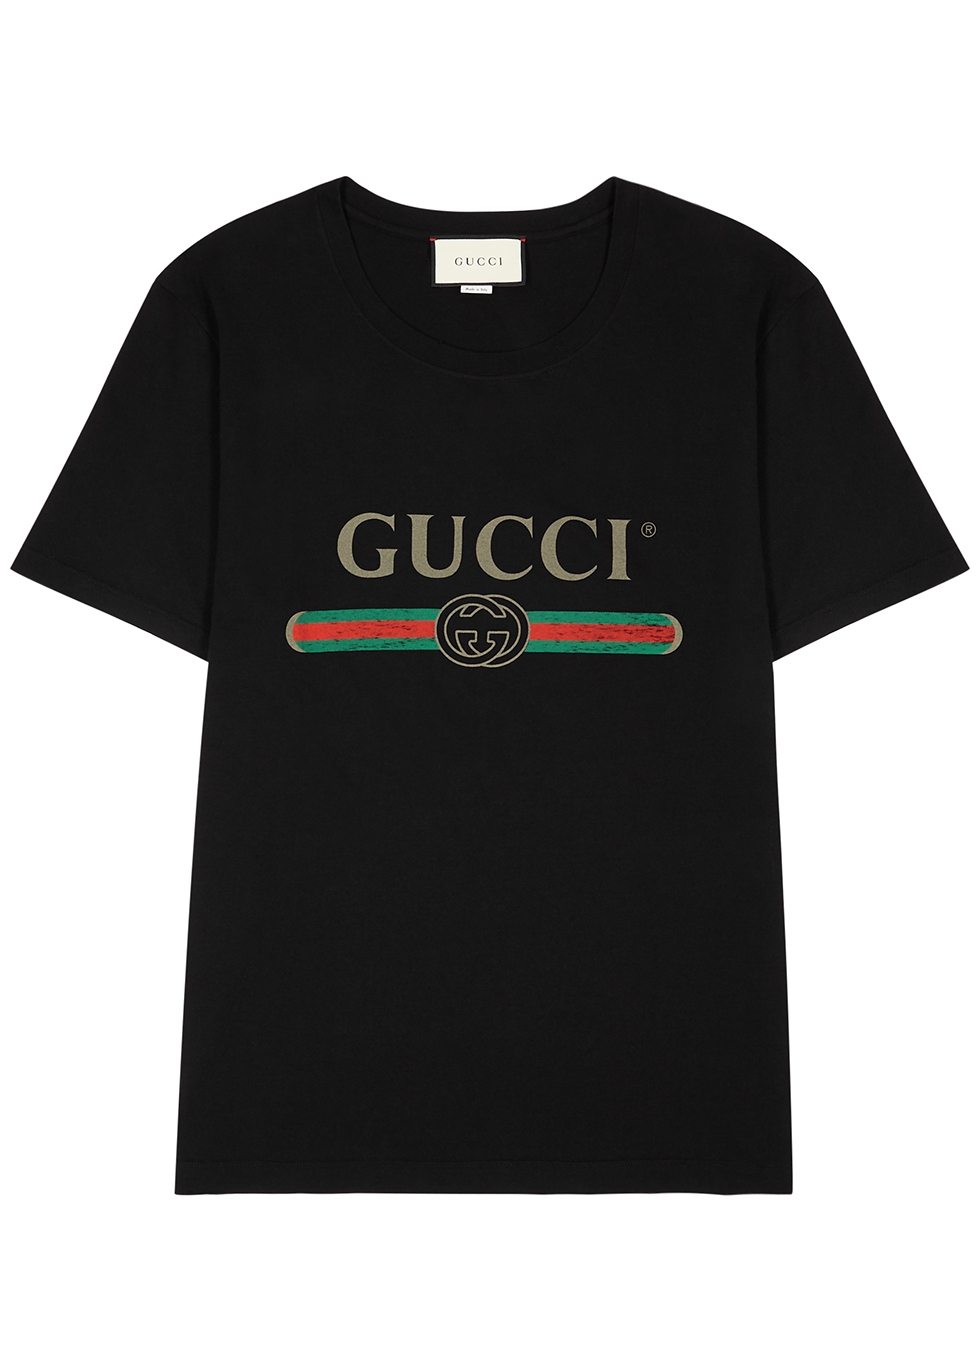 t shirt of gucci